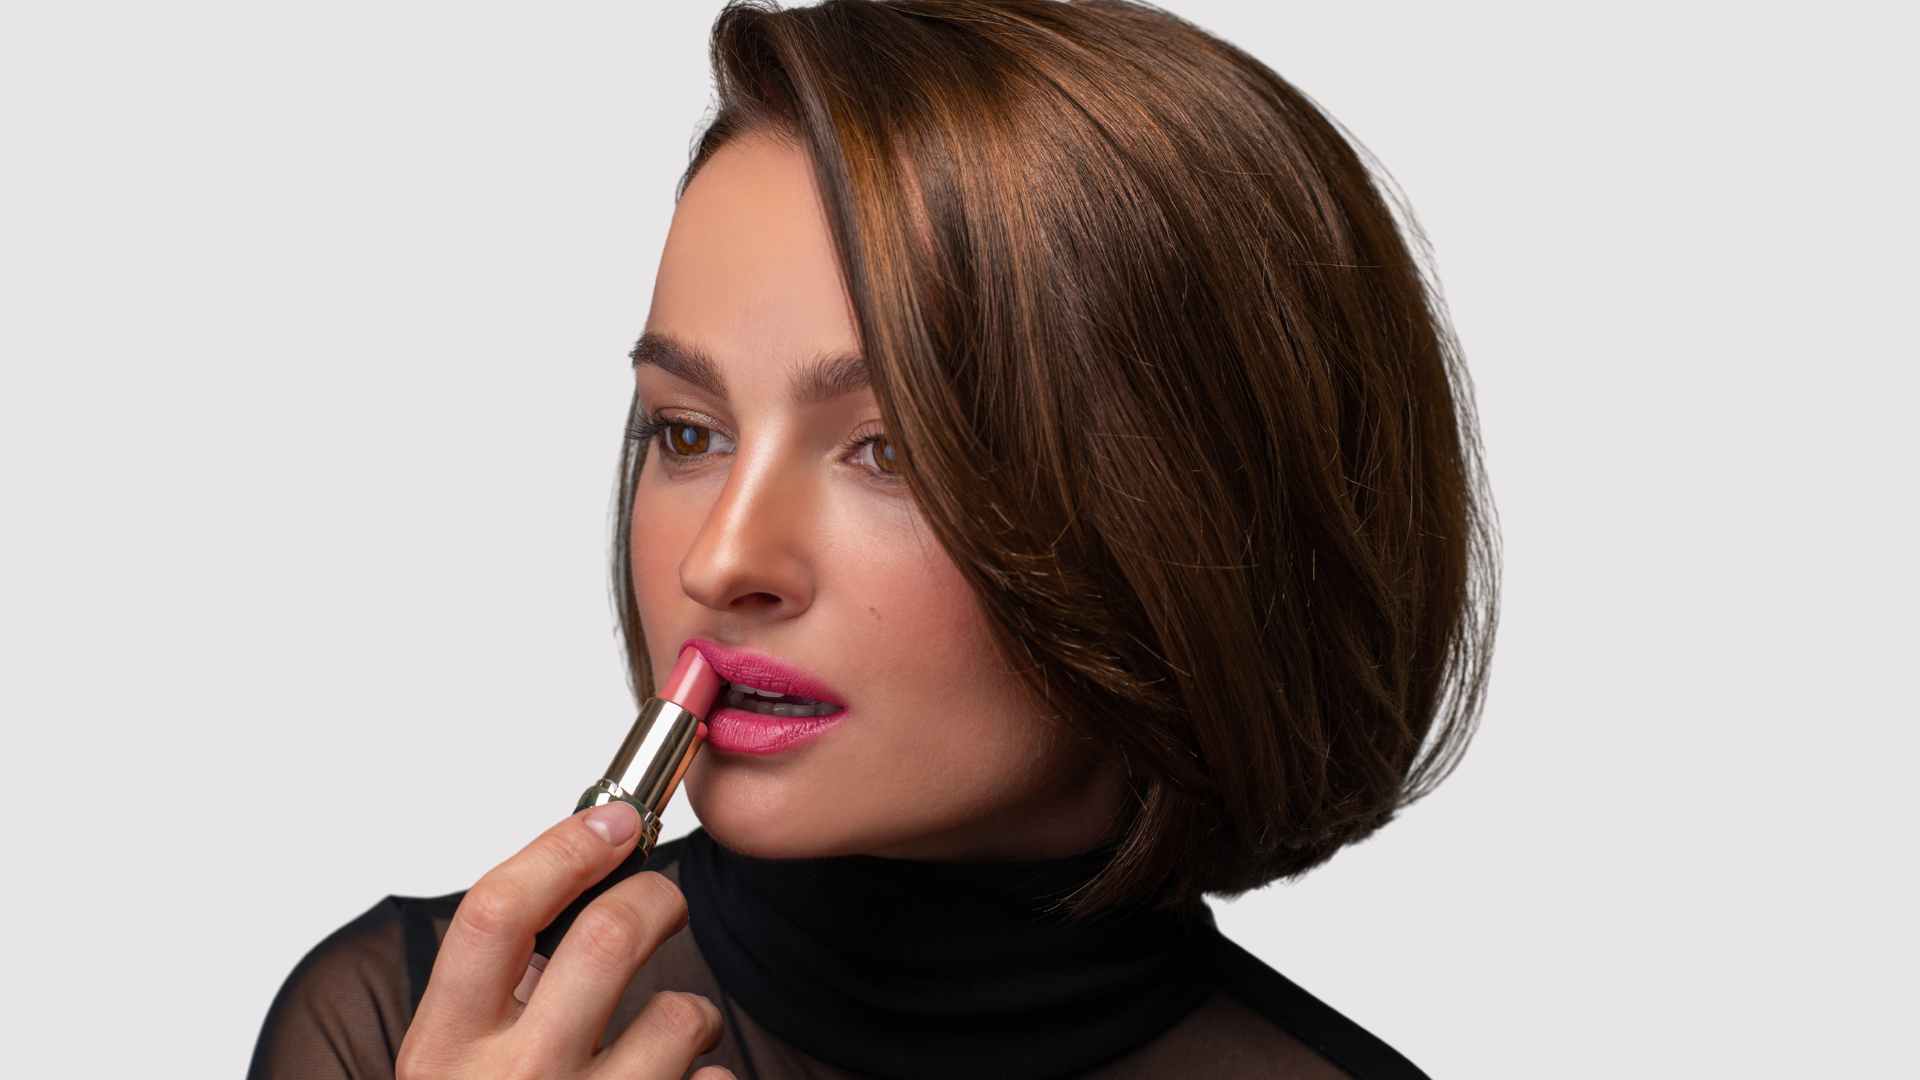 Female applying lipstick with sleek bob hairstyle 